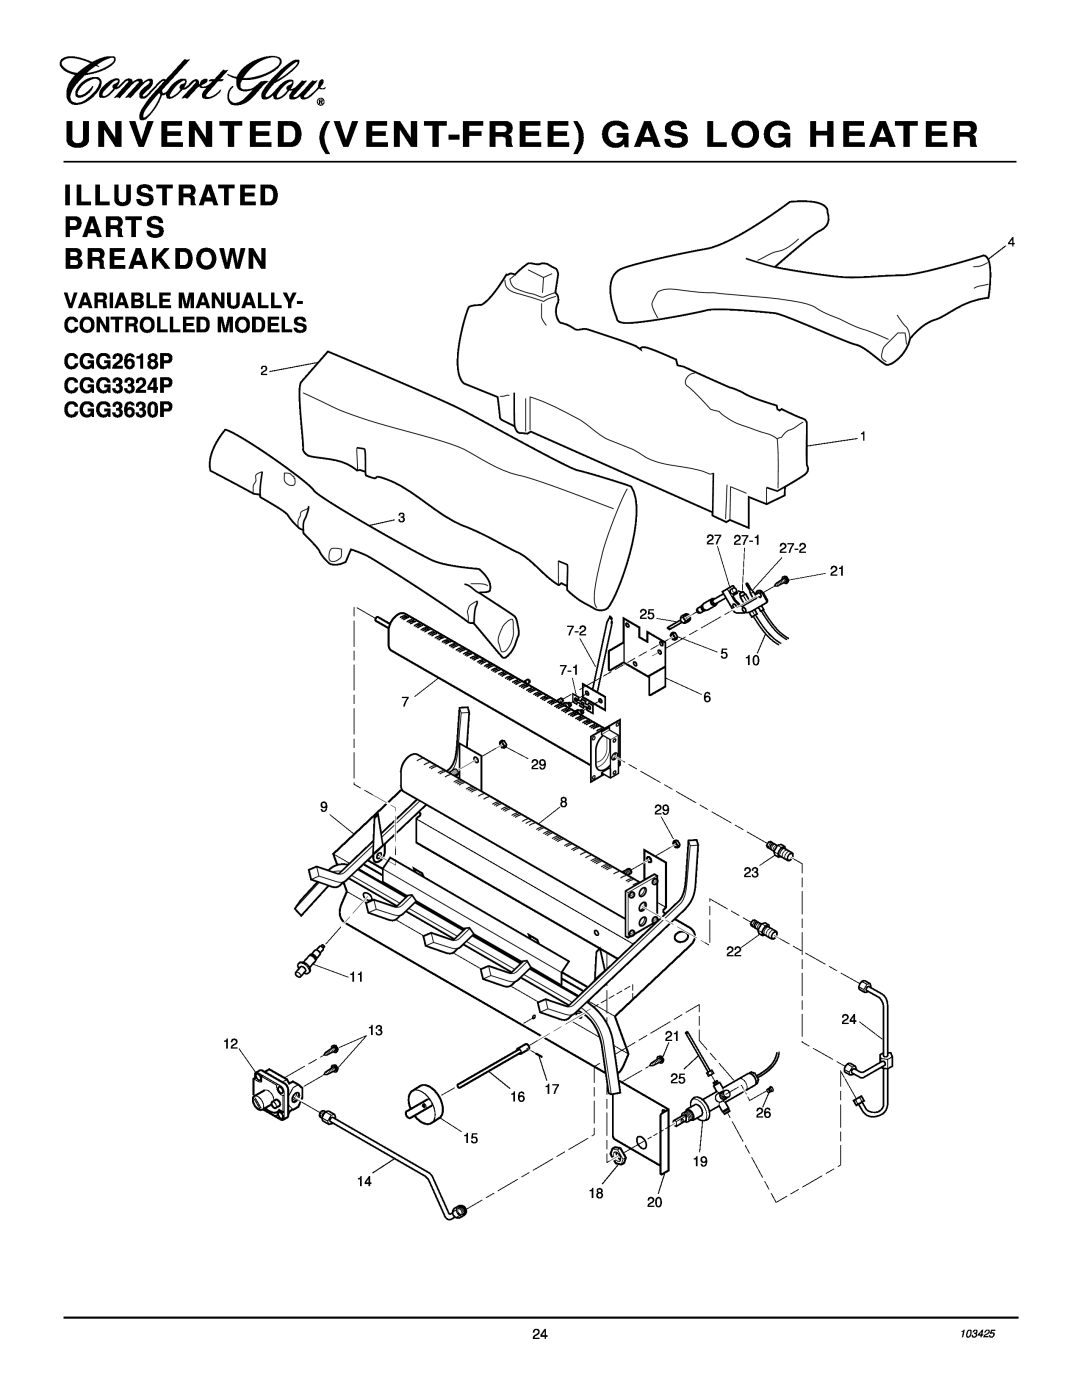 Desa Tech CGG2618P, CGG3630P Illustrated Parts Breakdown, Unvented Vent-Free Gas Log Heater, 7-2 7-1, 27-2, 103425 